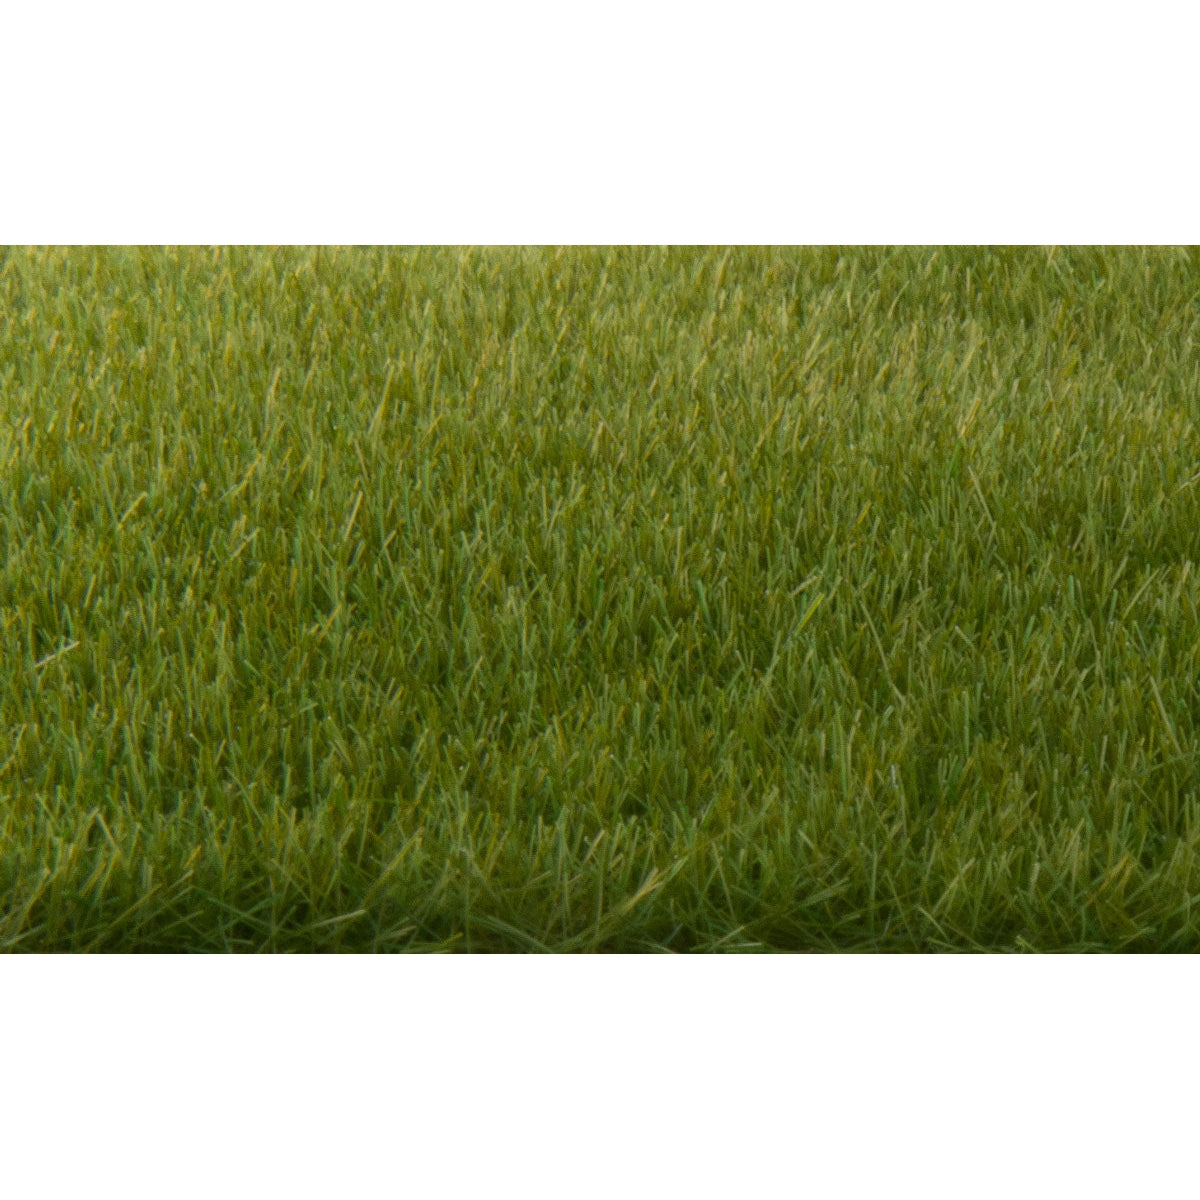 Woodland Scenics Static Grass Dark Green 4mm